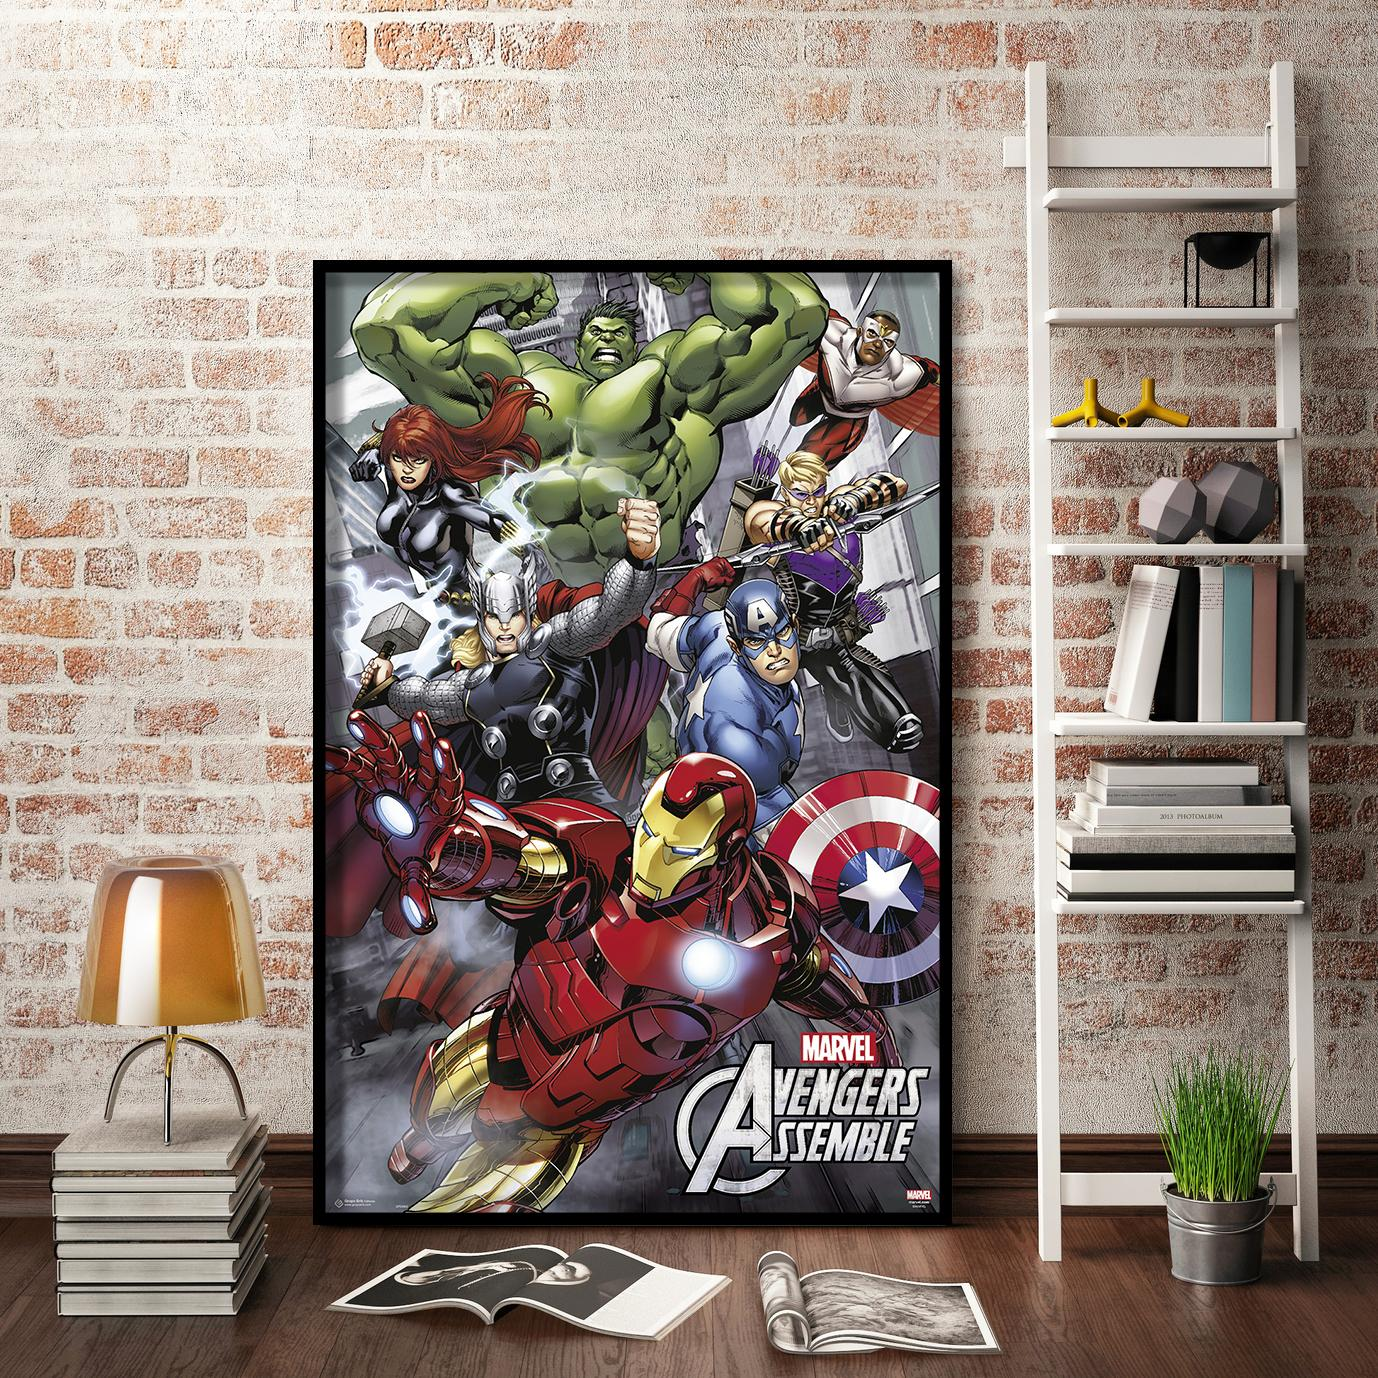 GRUPO ERIK Avengers The EDITORES Poster Comics Marvel